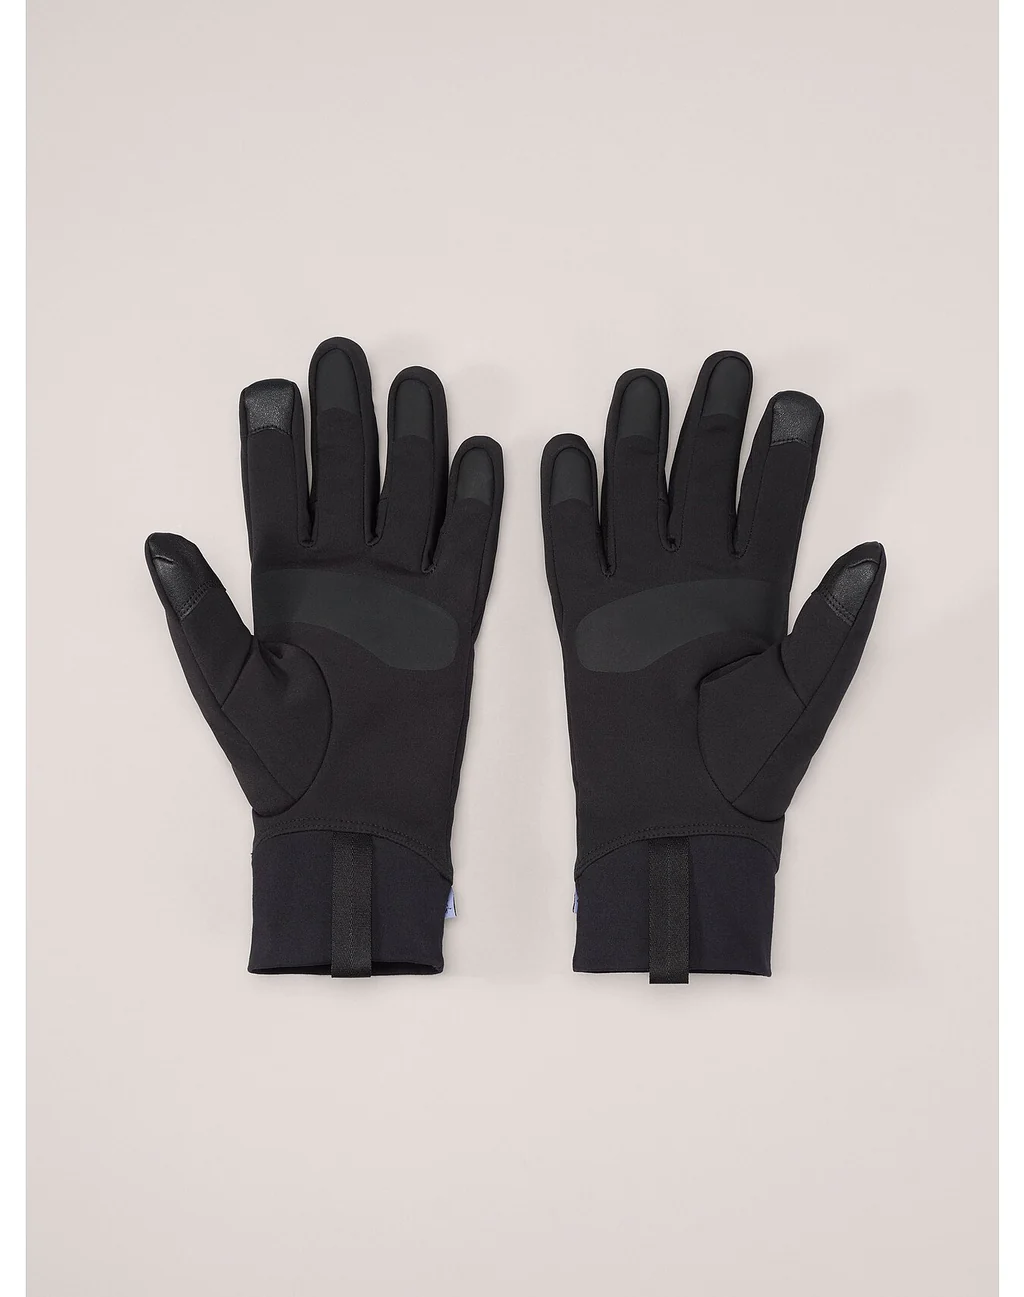 Venta Glove(M(MEN) Black/ブラック): ARC'TERYX